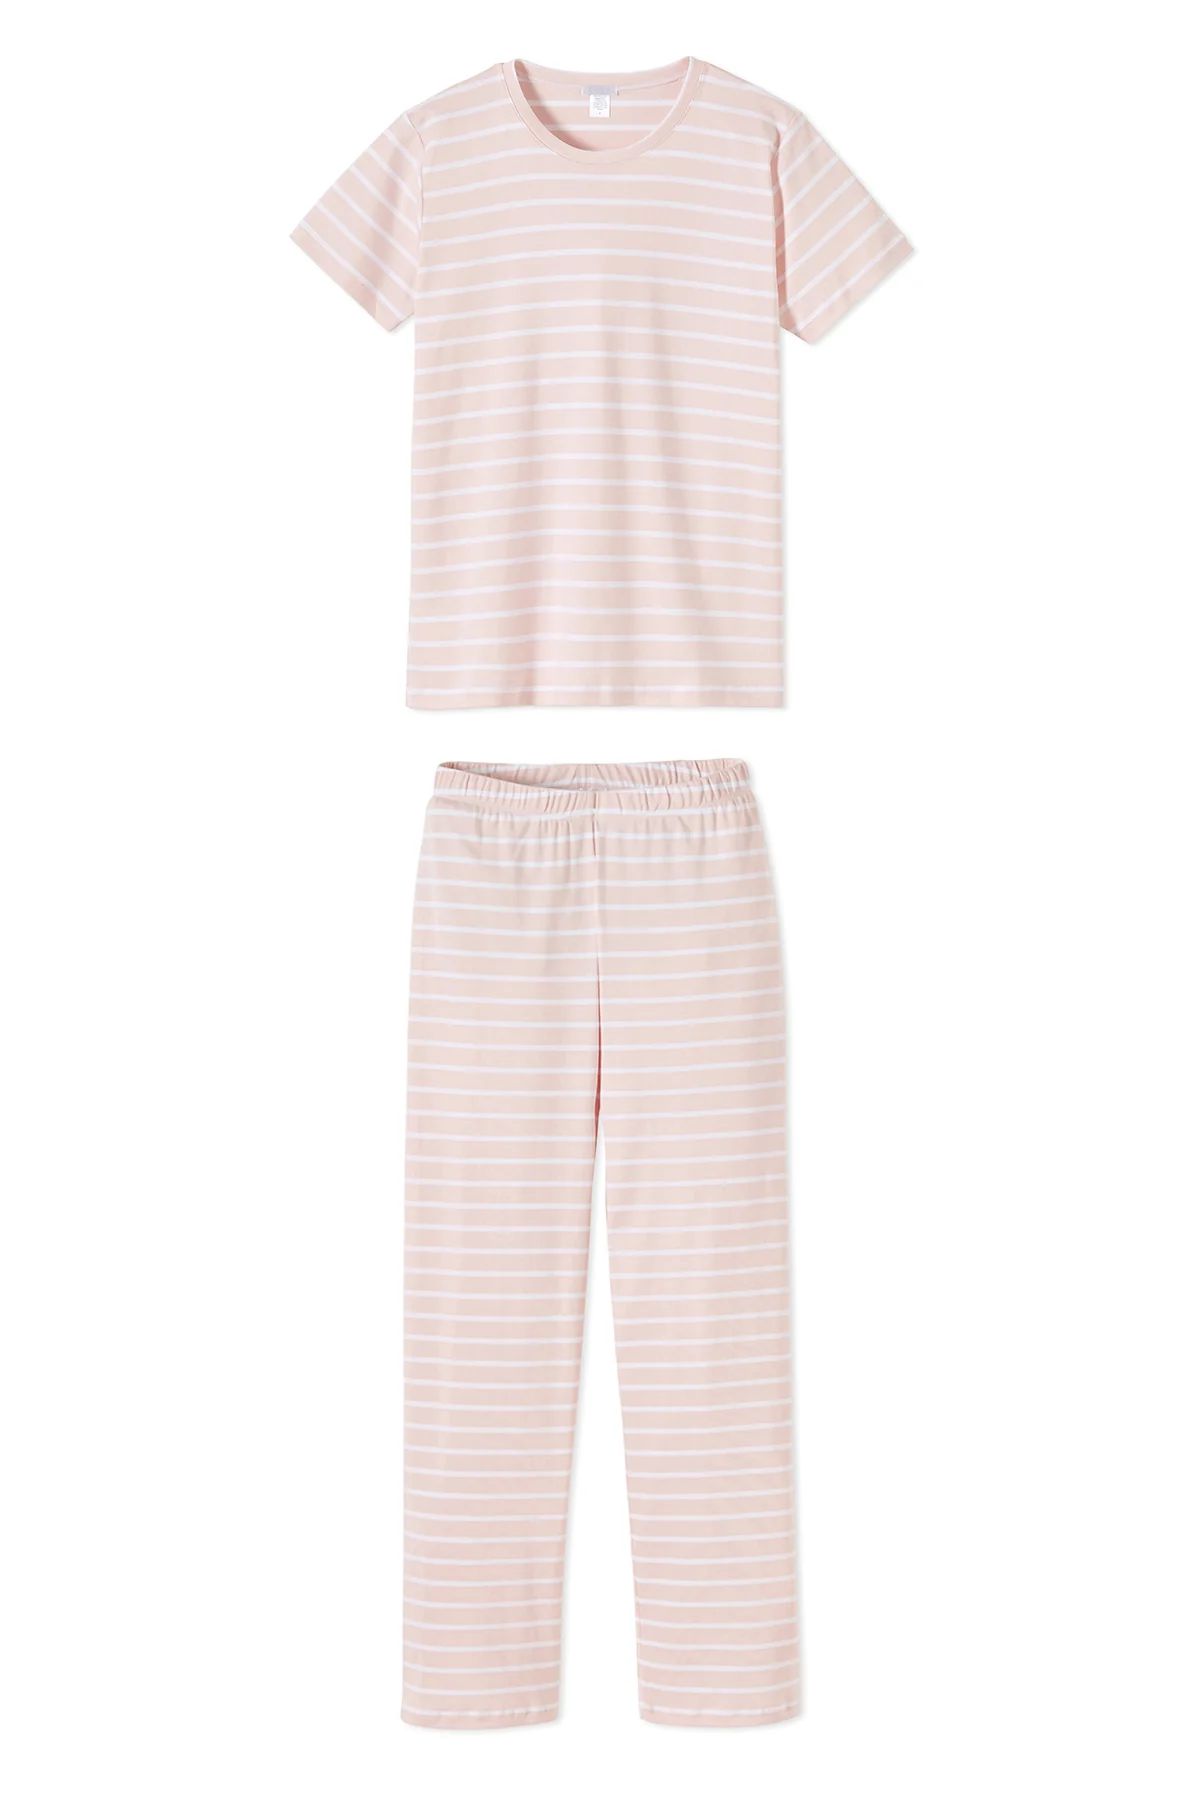 Pima Short-Long Weekend Set in Cherry Blossom | LAKE Pajamas